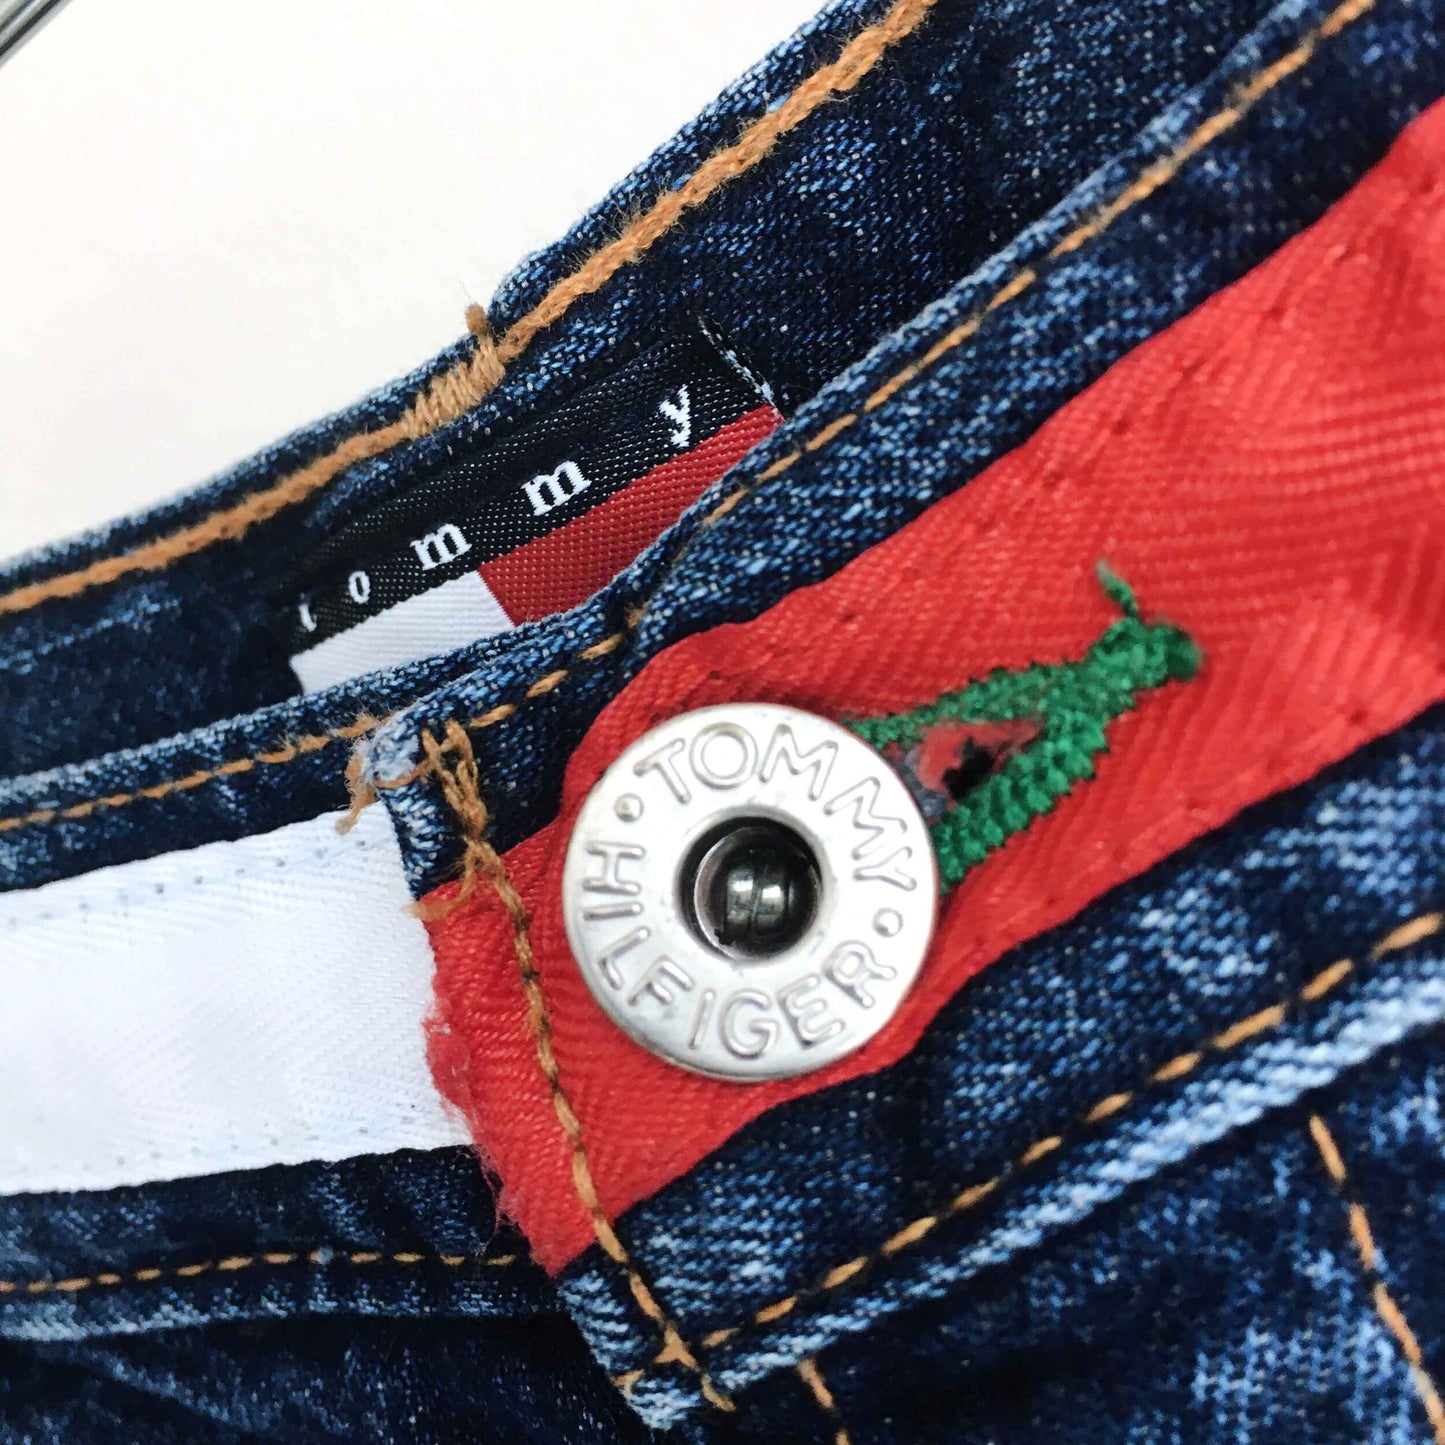 Vintage Tommy Hilfiger button fly jean shorts - size 26